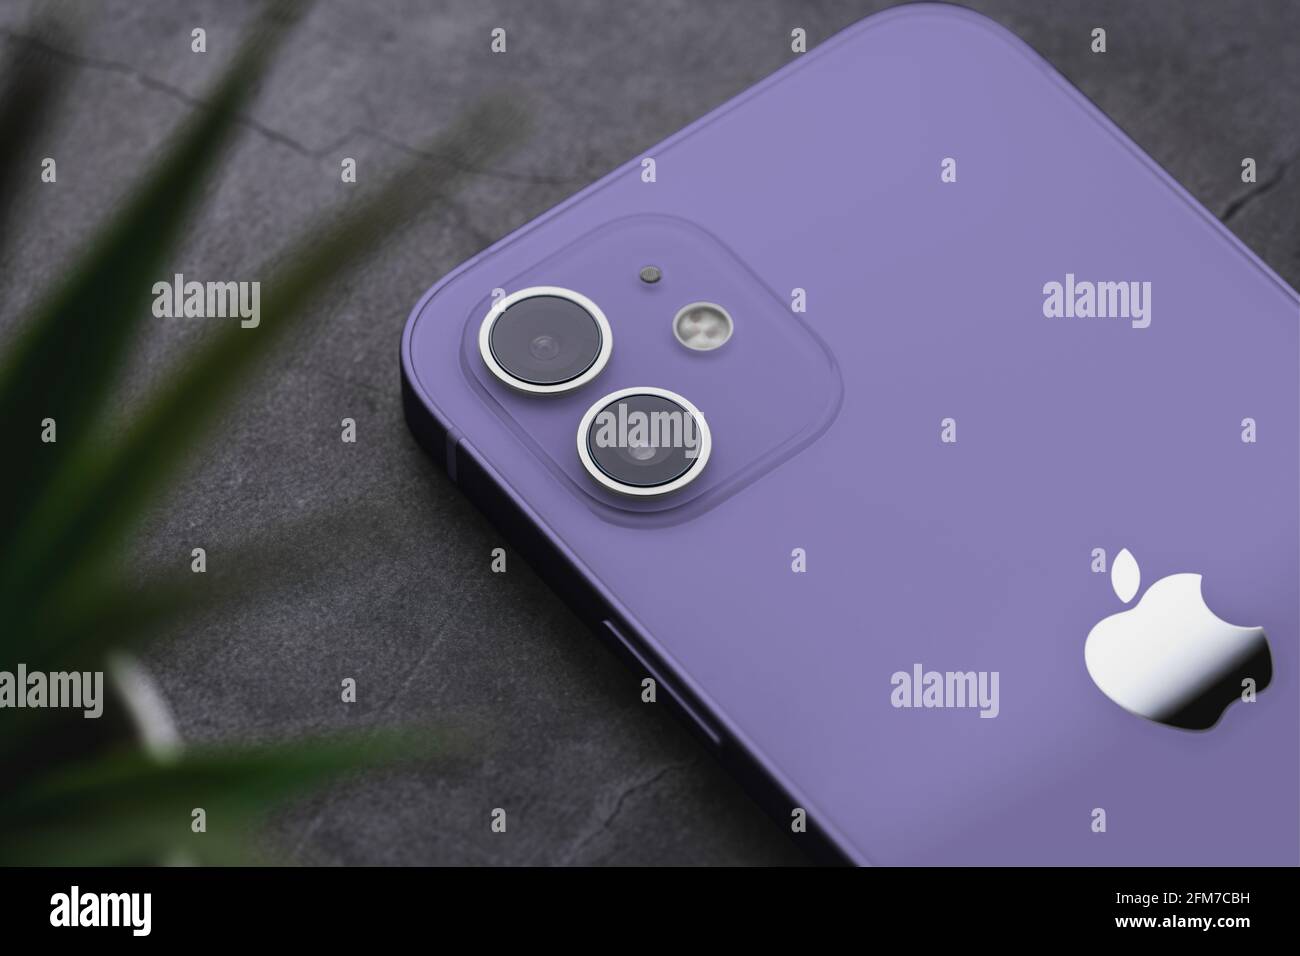 Antalya, Turkey - May 06, 2021: Back view of new iPhone 12 purple smartphone Stock Photo